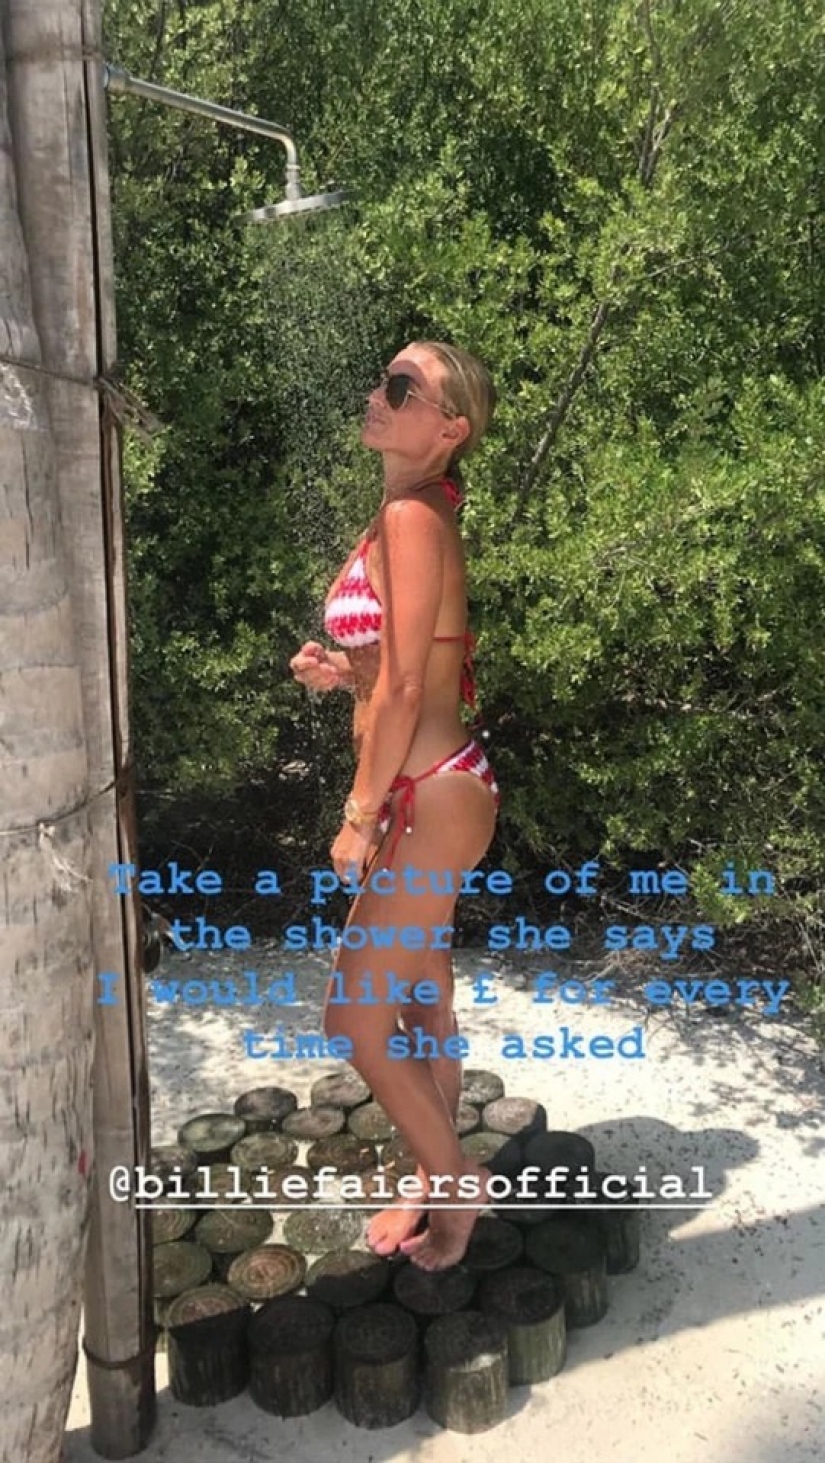 Tarnished reputation: hot instagram model posing in the shower